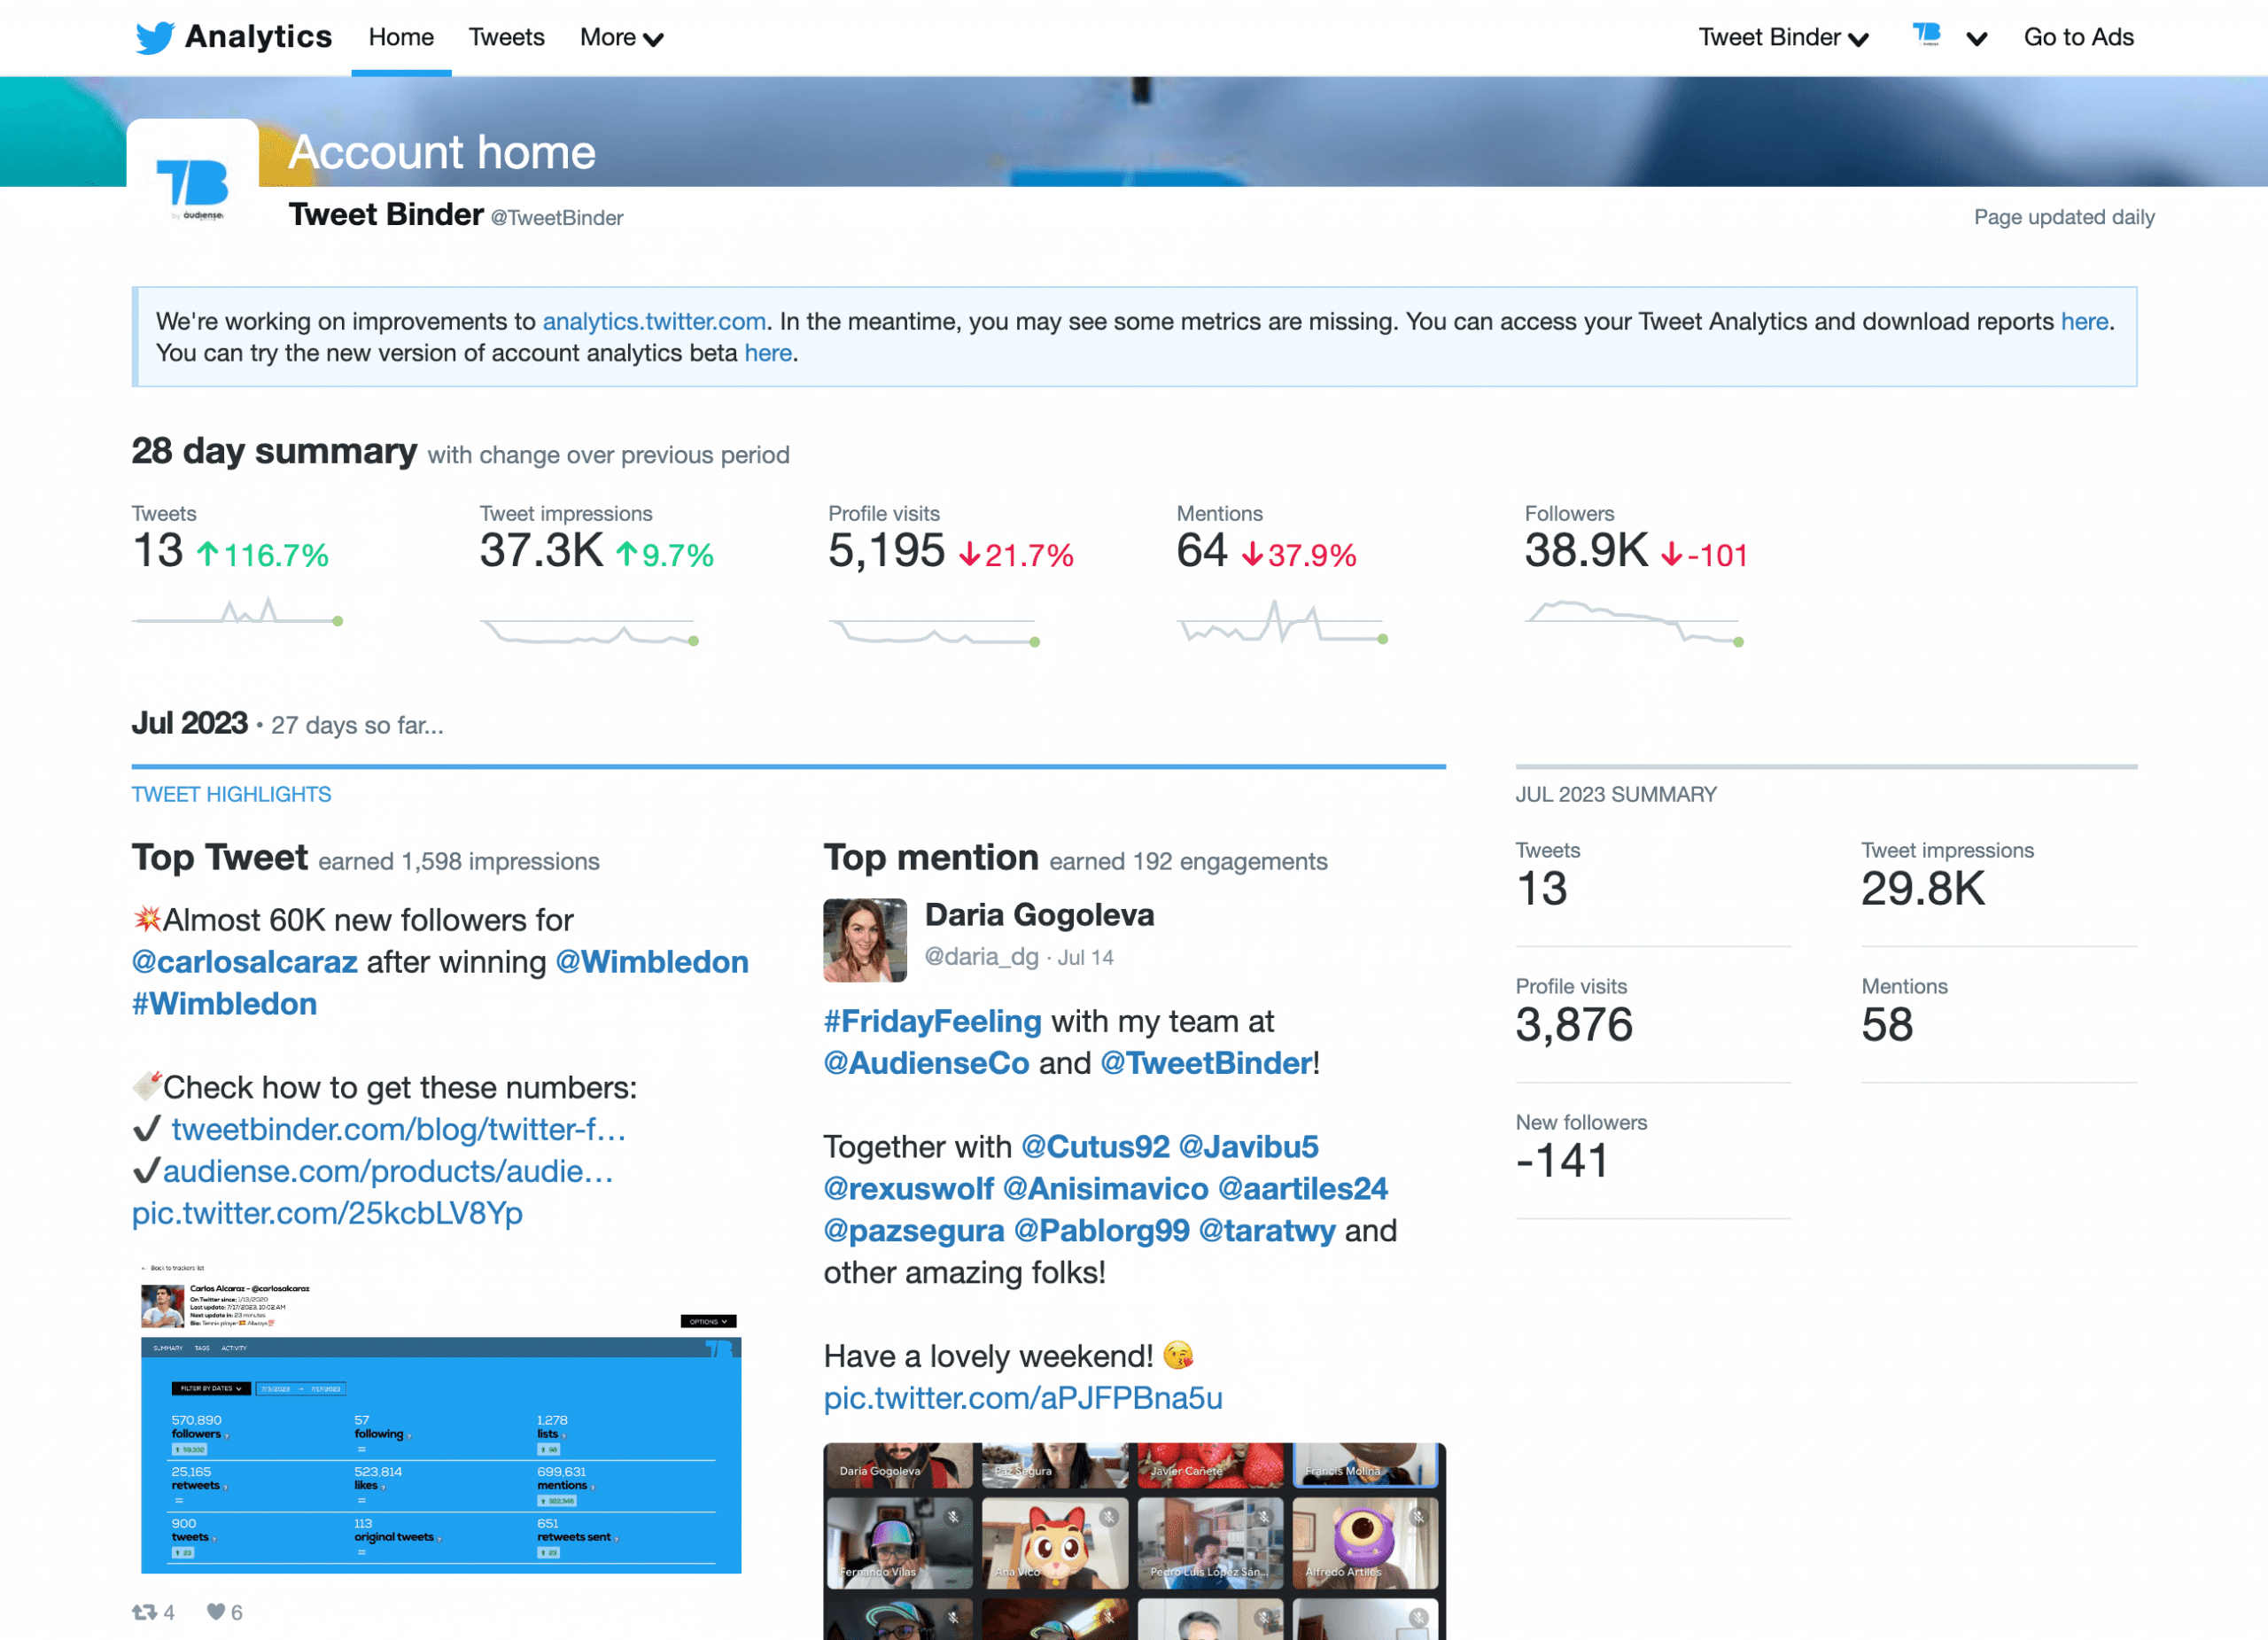 Twitter Analytics Dashboard Home page